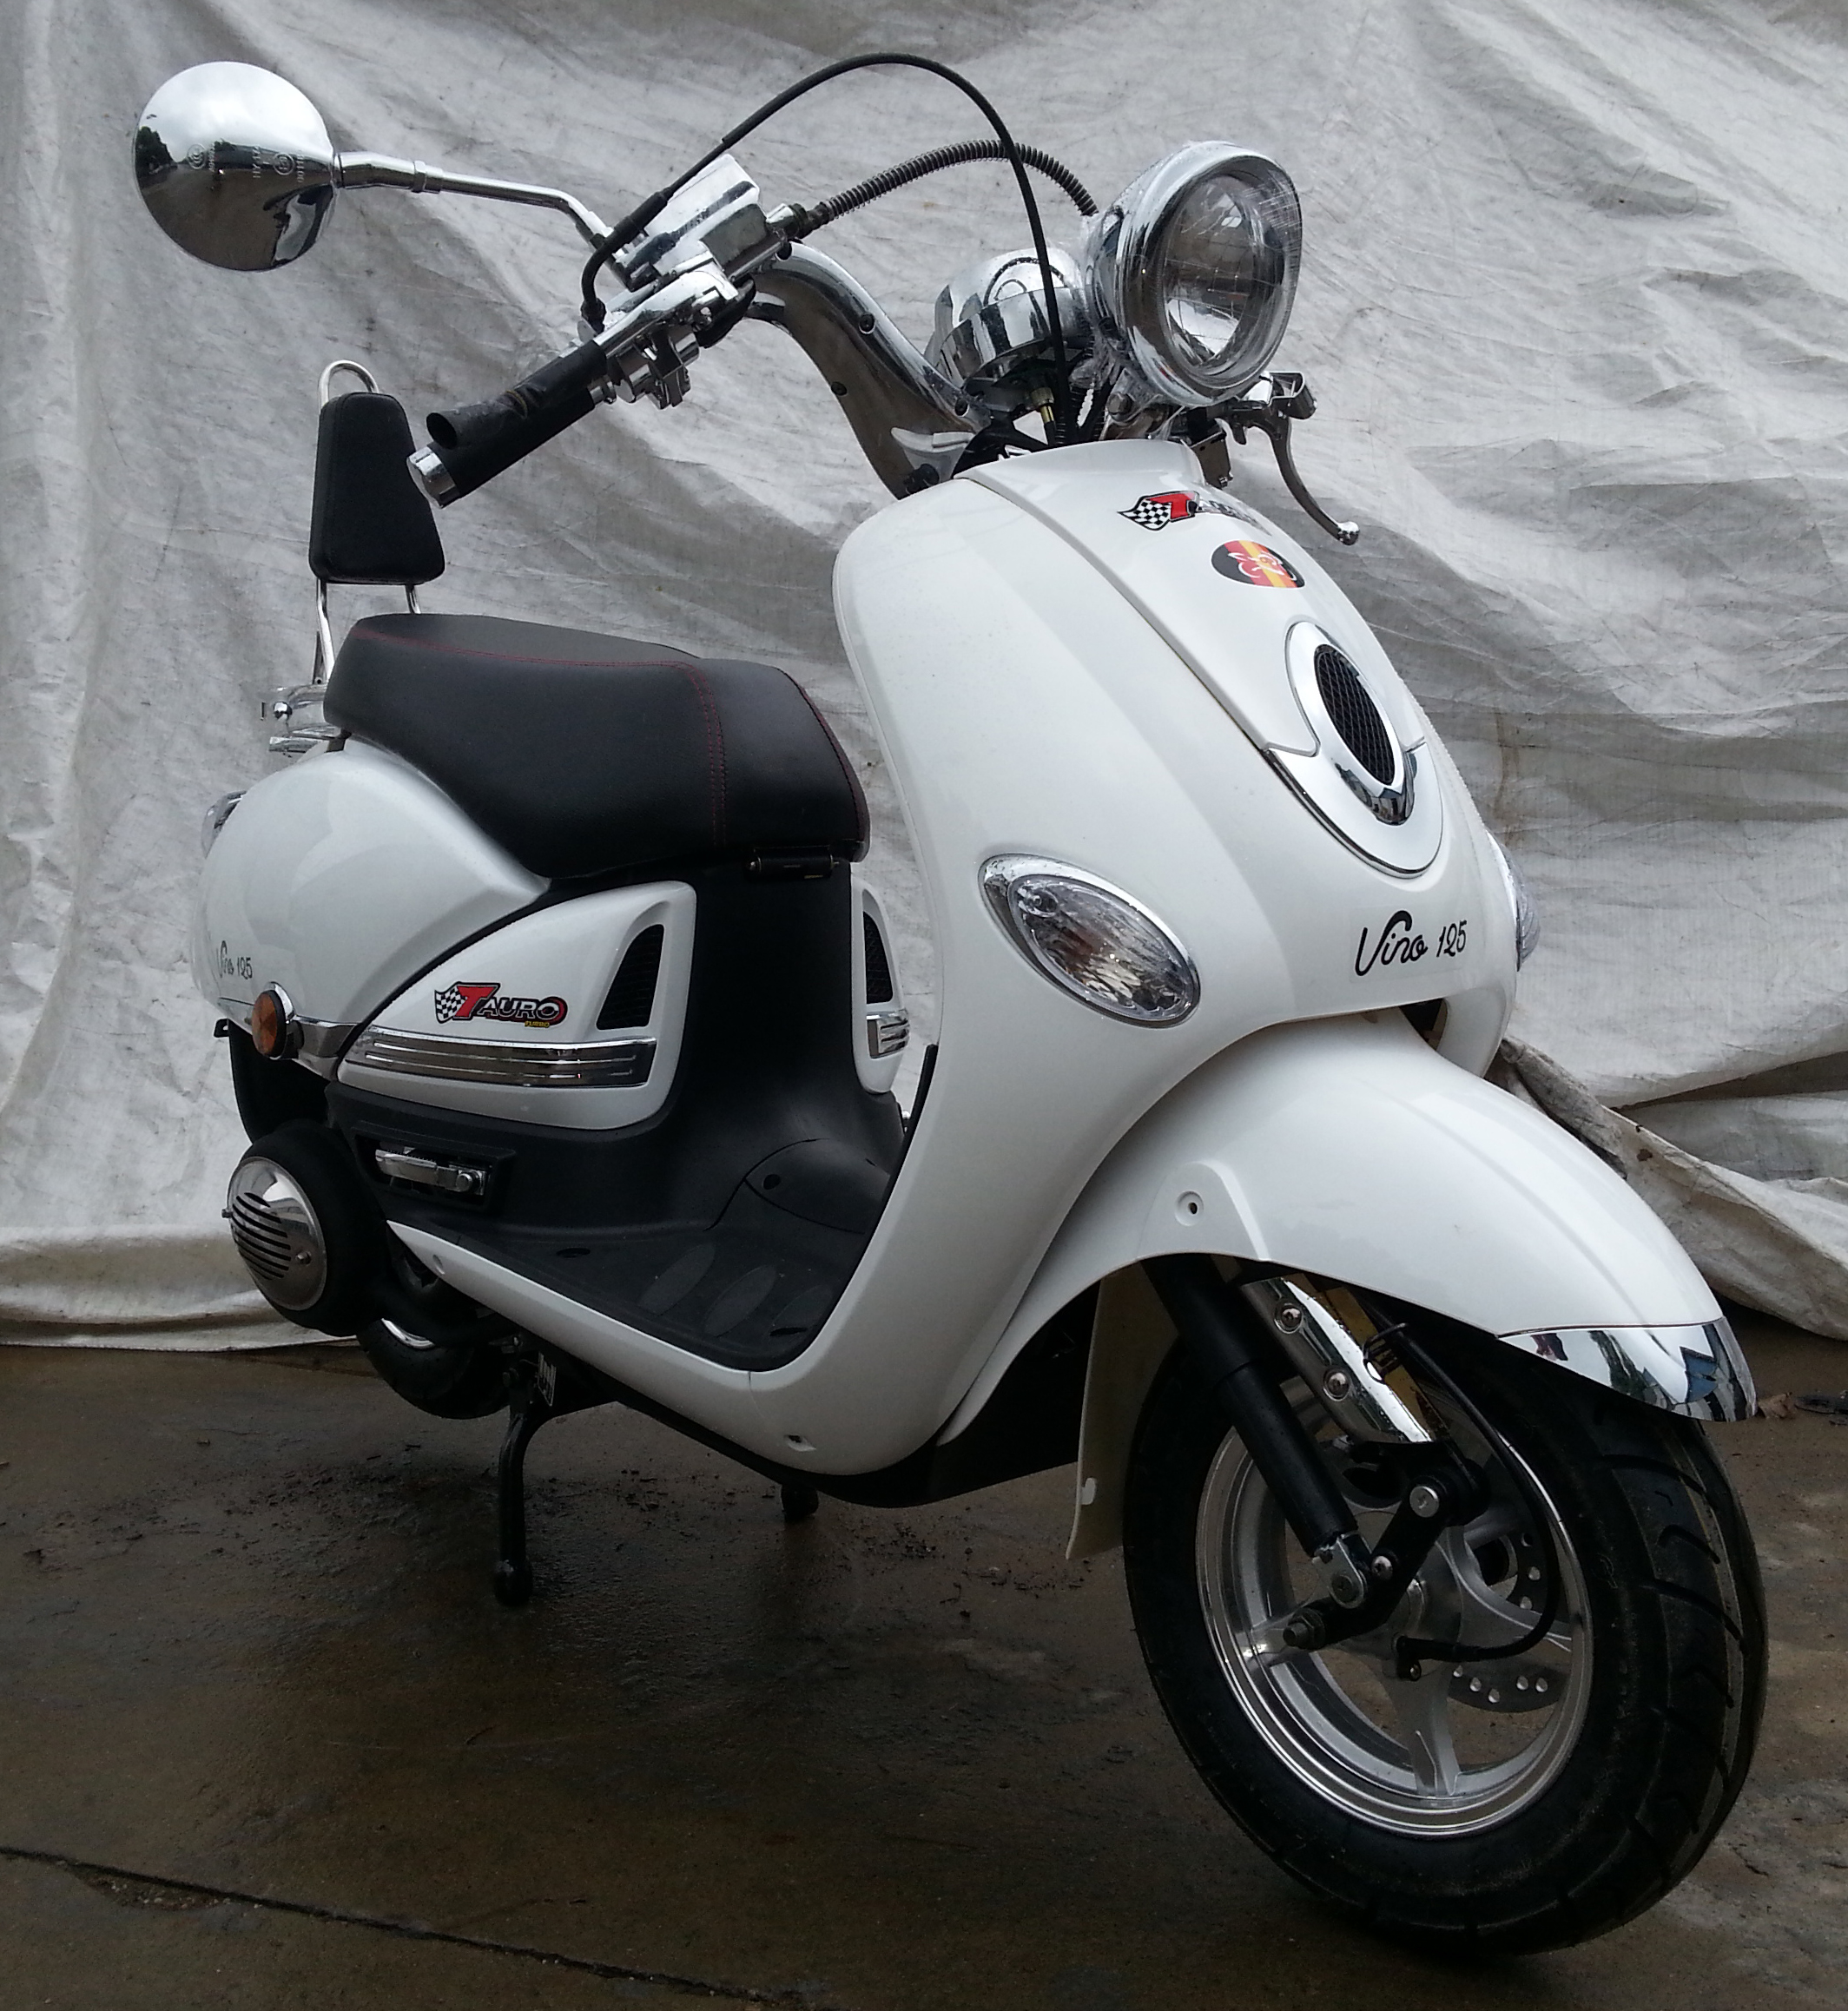 sanyou JGW 150cc Retro motorcycle scooter